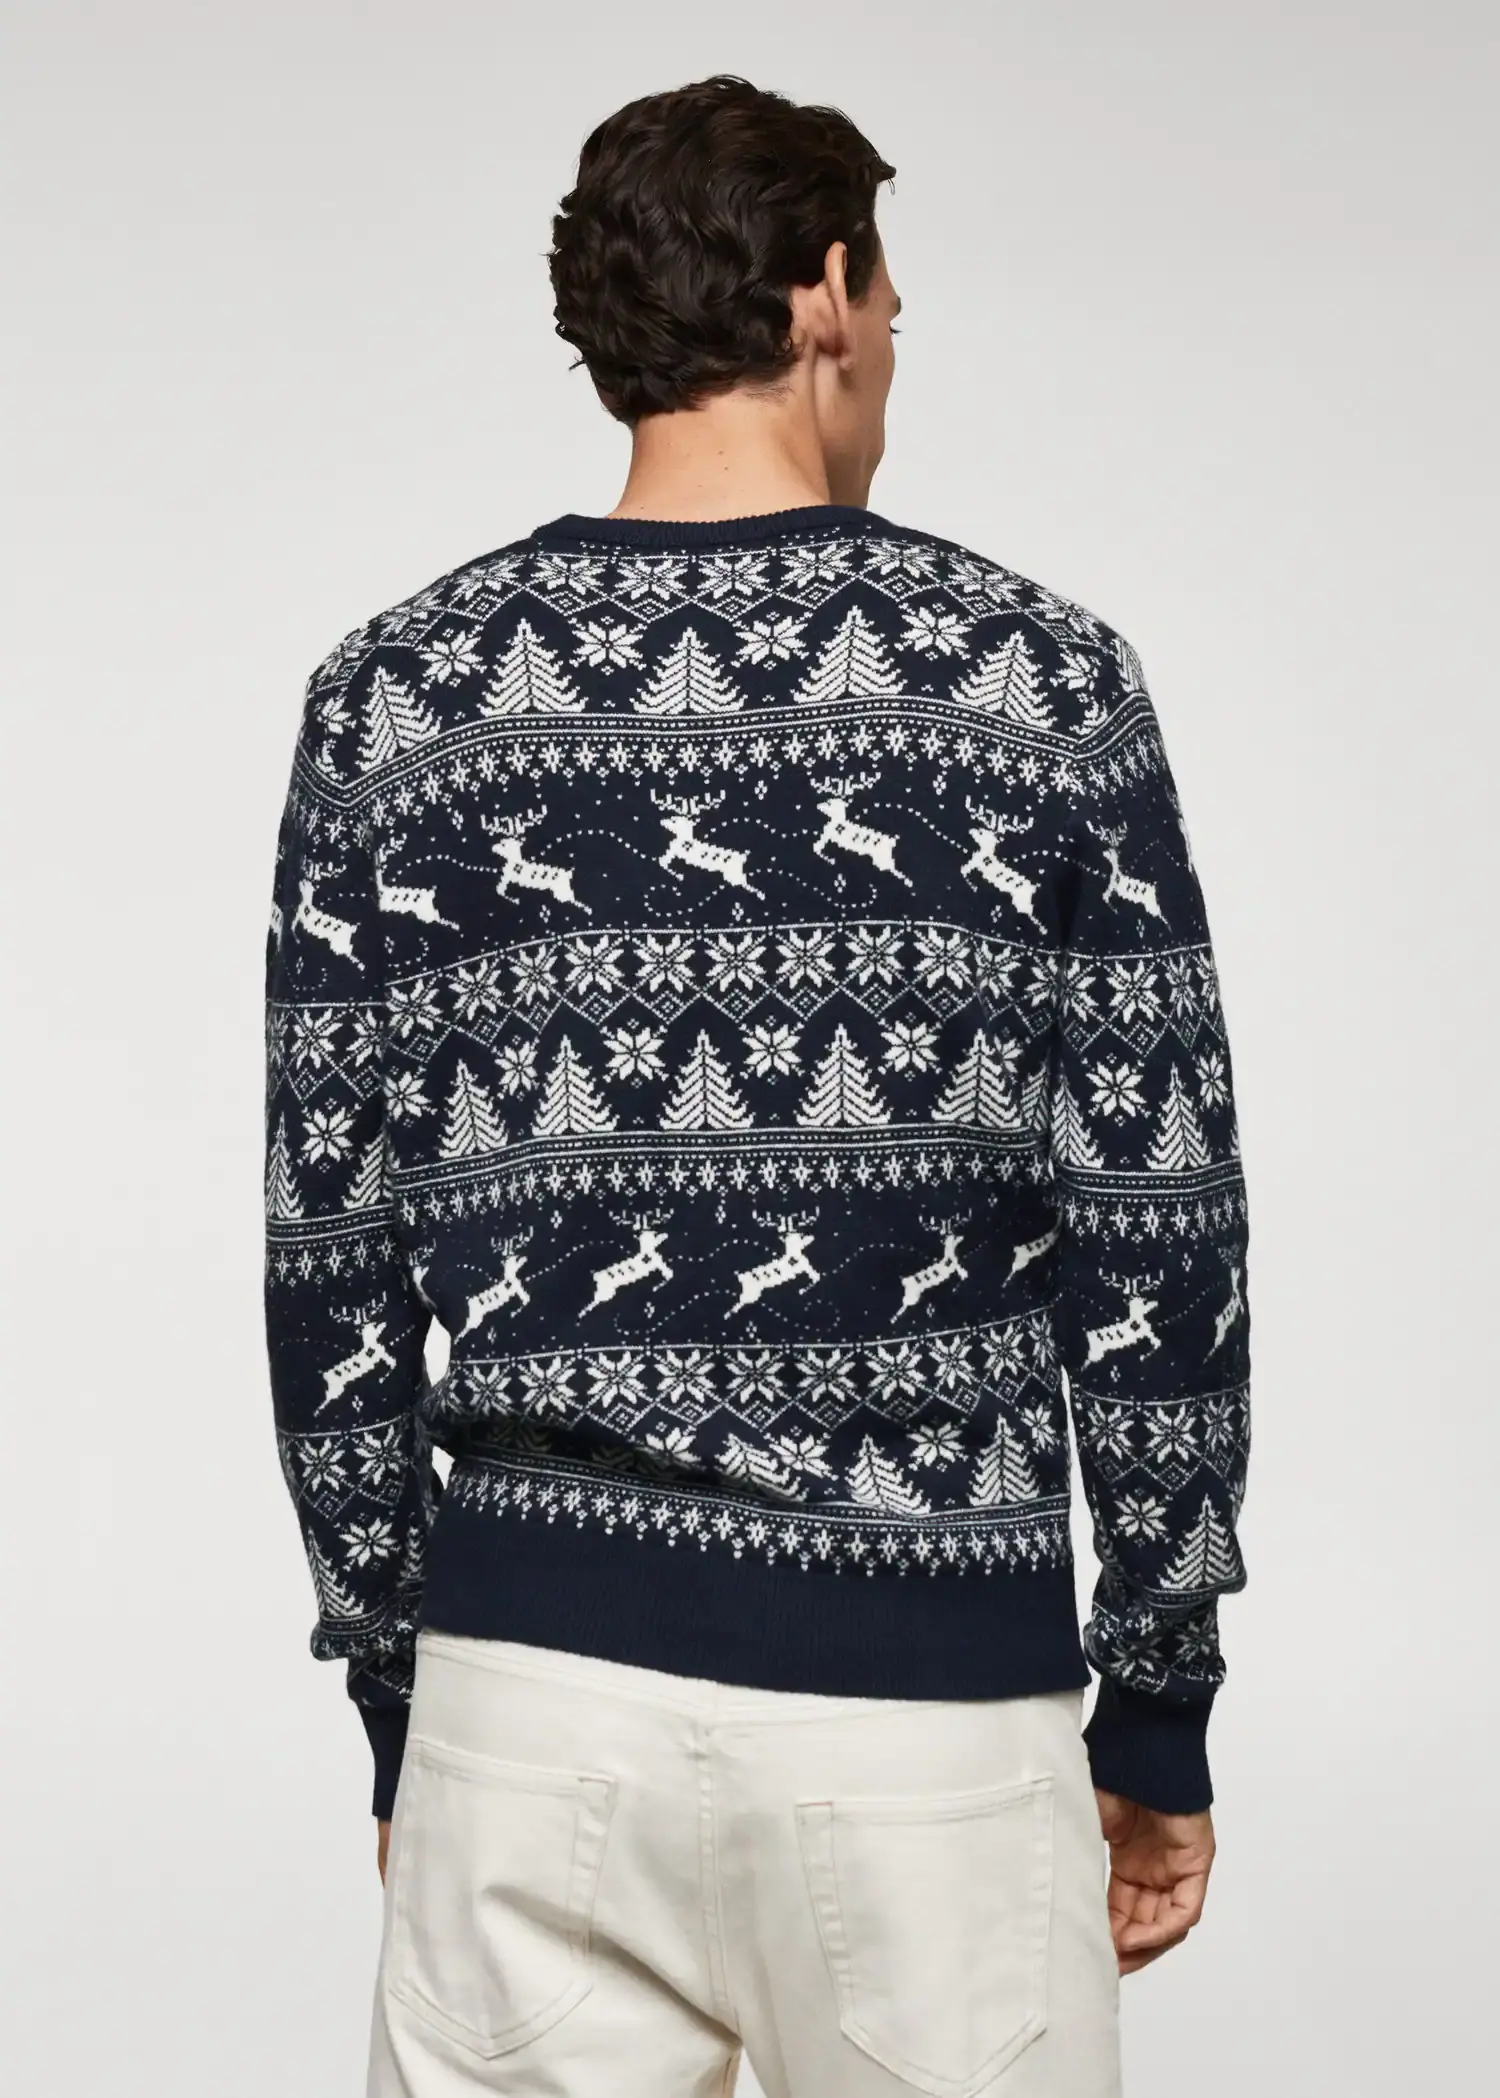 Mango Christmas jacquard sweater. 3